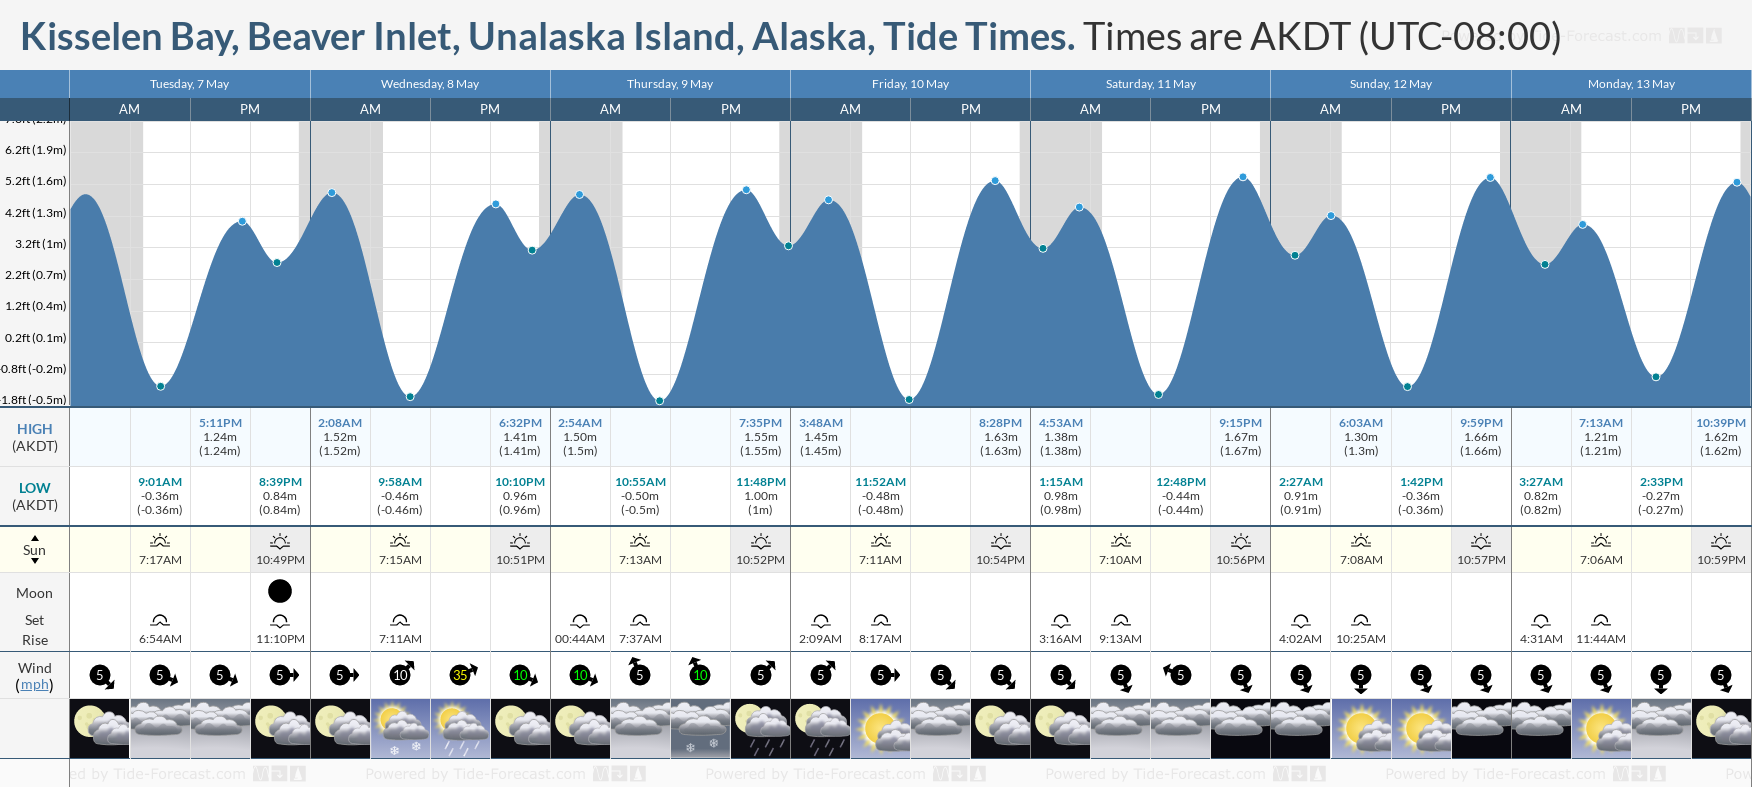 Kisselen Bay, Beaver Inlet, Unalaska Island, Alaska Tide Chart including high and low tide tide times for the next 7 days